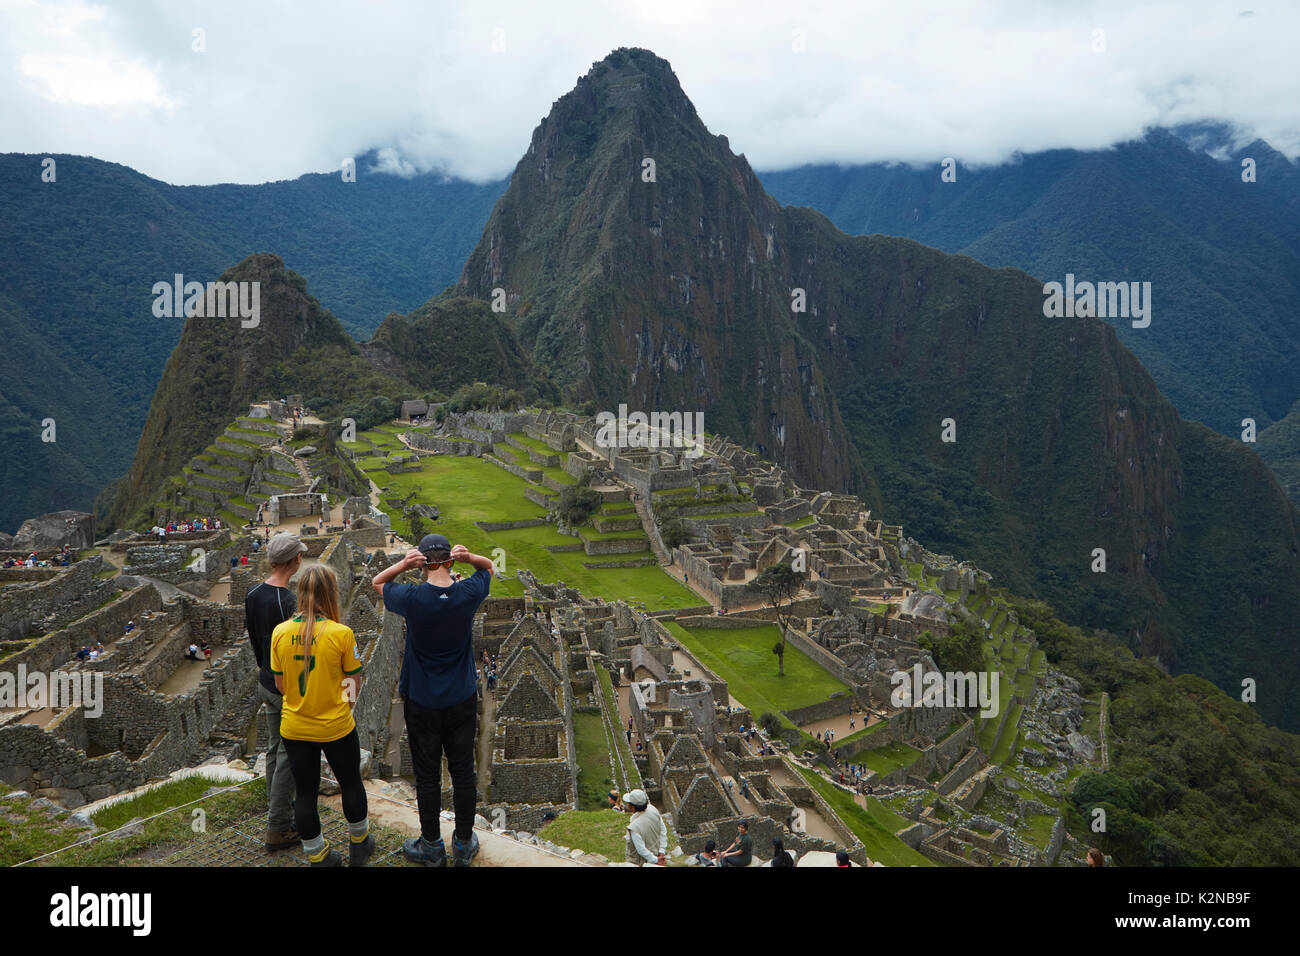 Tourist family at Machu Picchu, 15th century Inca ruins (World Heritage Site), Sacred Valley, Peru, South America (MR) Stock Photo